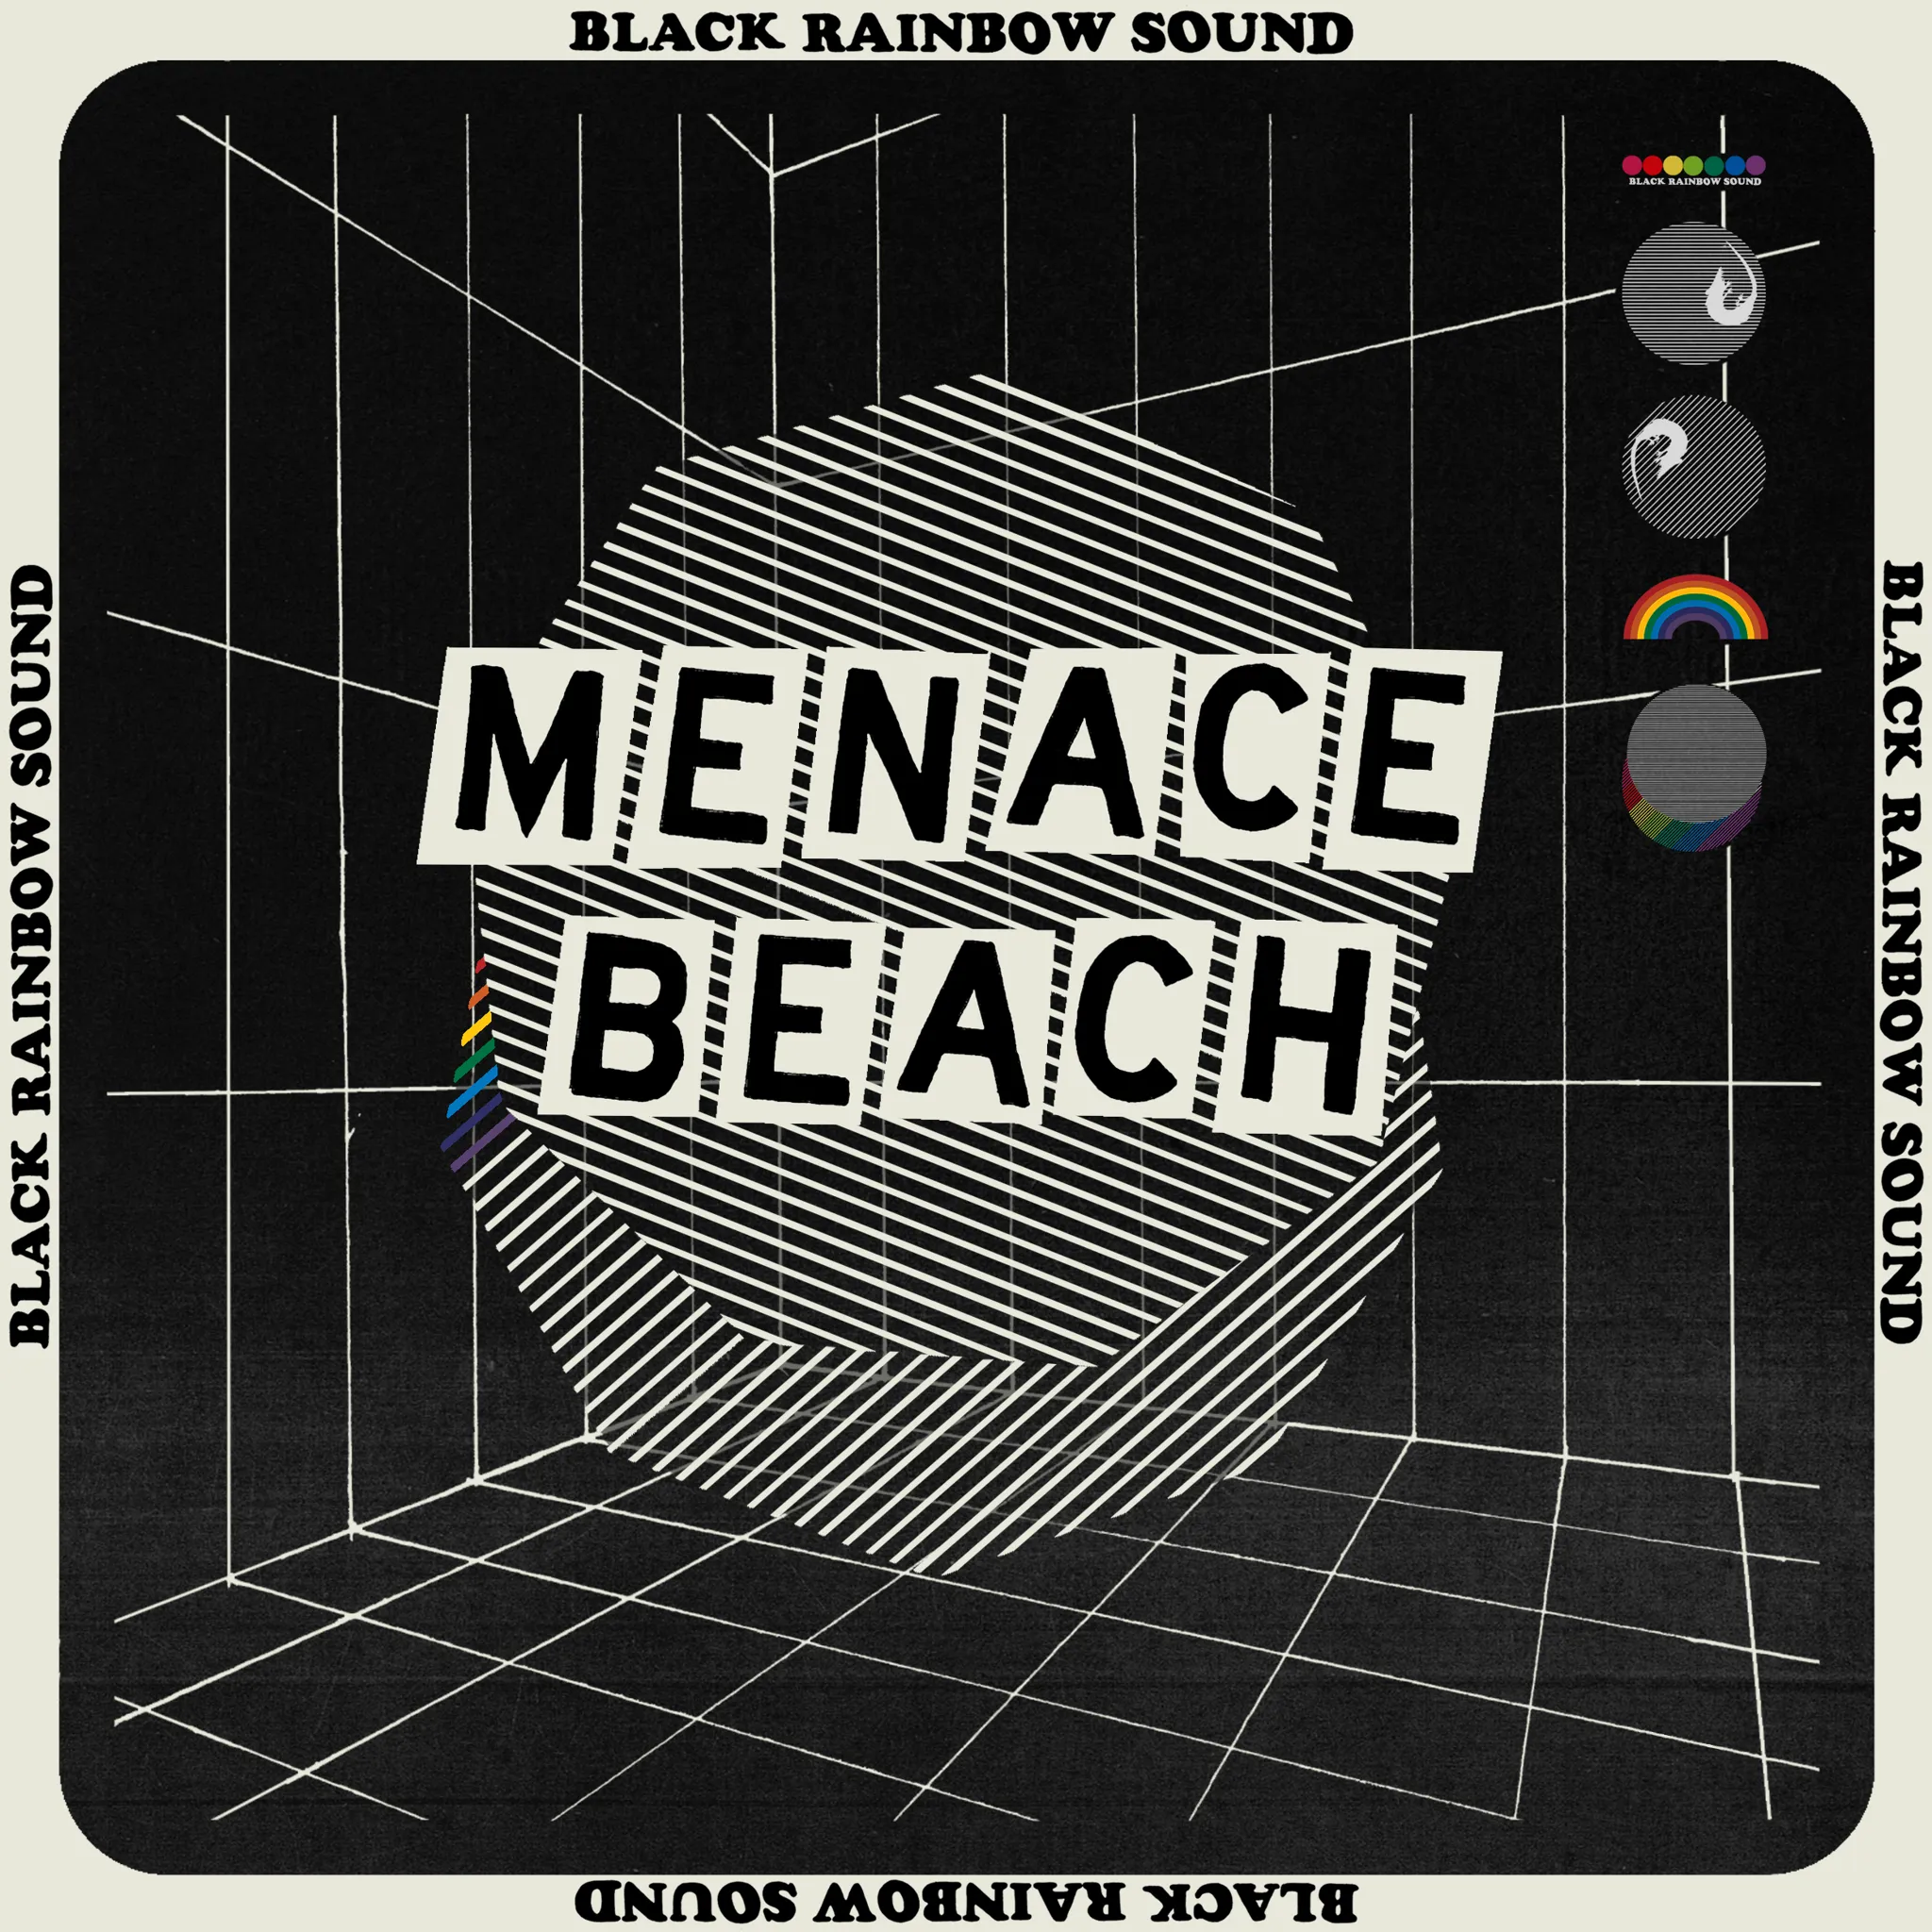 <strong>Menace Beach - Black Rainbow Sound</strong> (Vinyl LP - white)